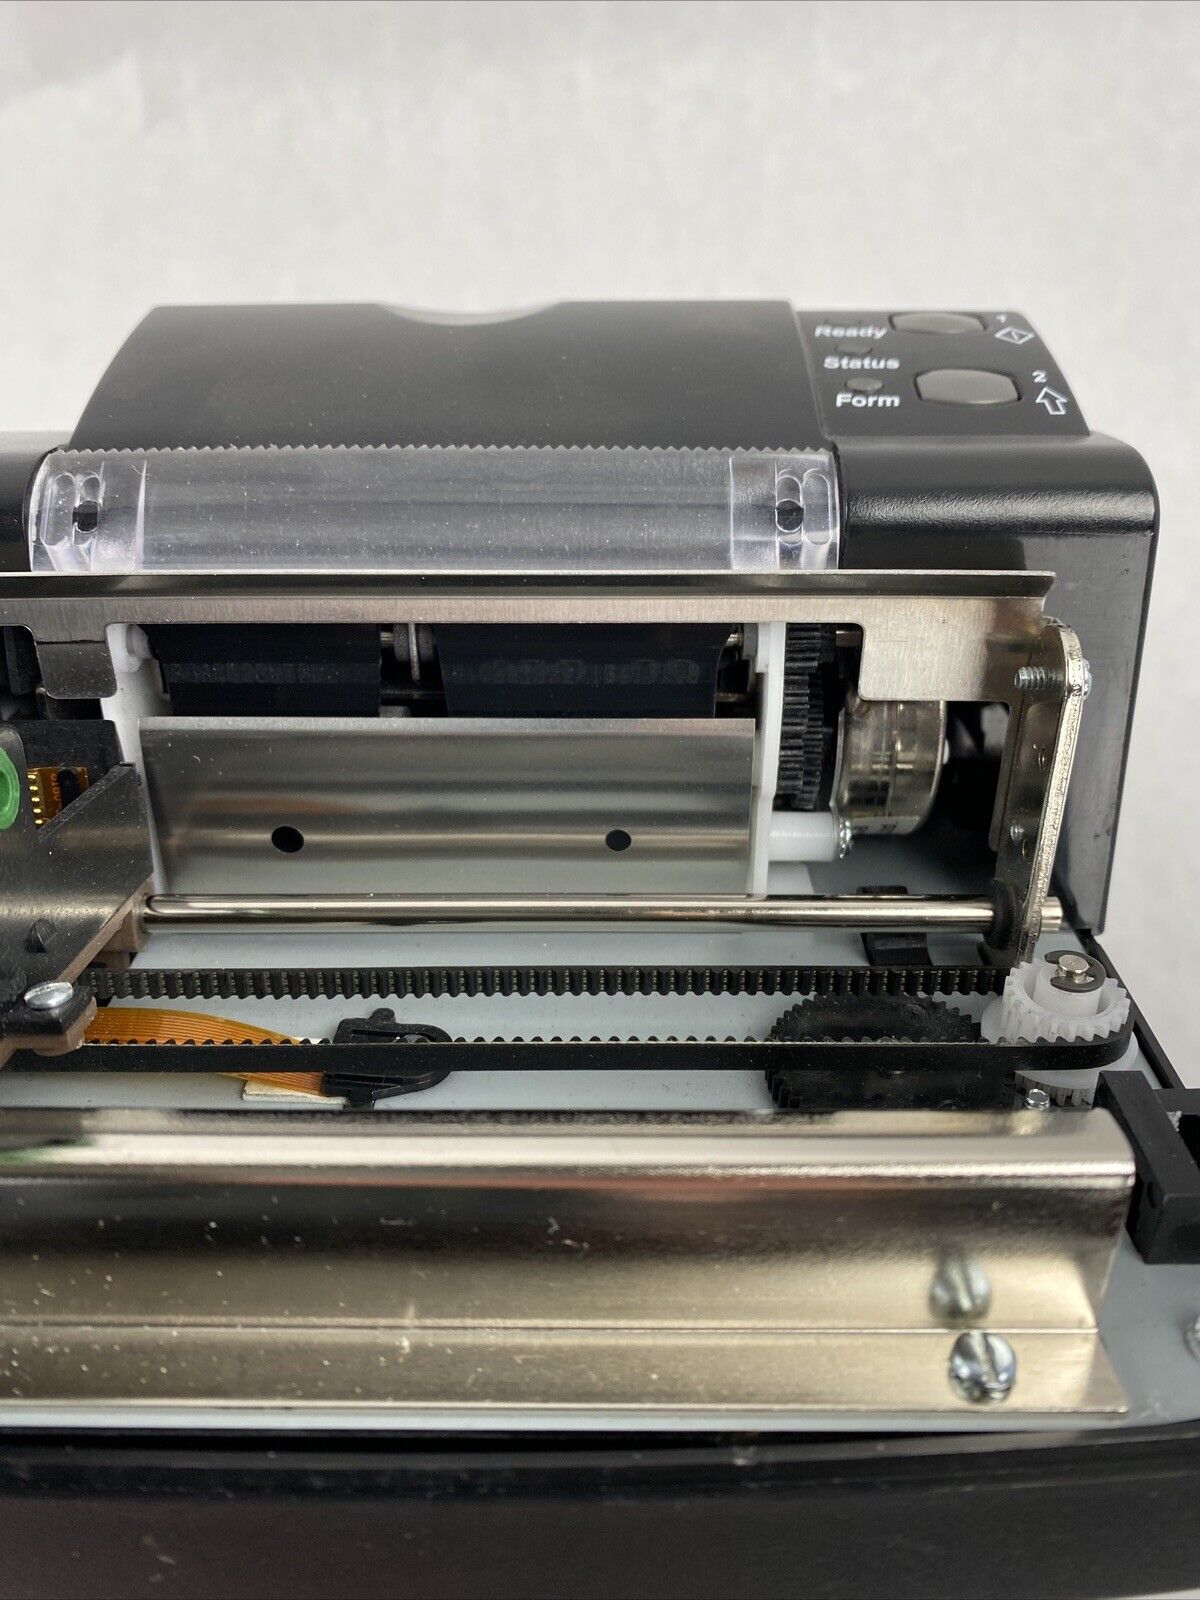 Addmaster IJ7102-2A Bank Teller Receipt Validation Printer NO PSU + NEEDS REPAIR